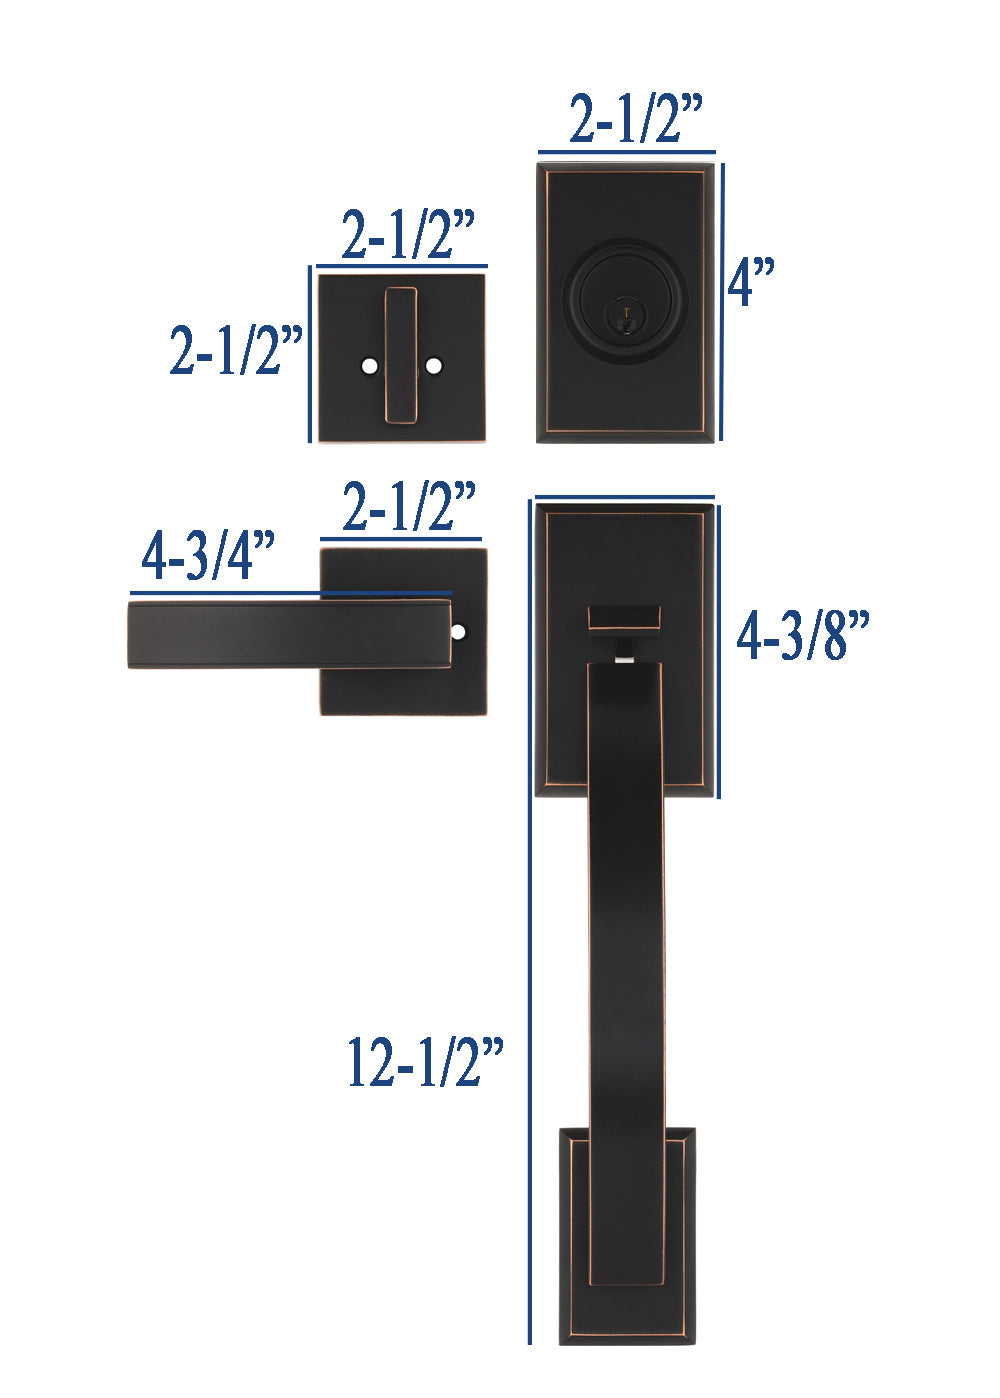 CozyBlock Single Door Handle Set with Single Cylinder Deadbolt, Rectangular Adjustable Entry Door Lock Set